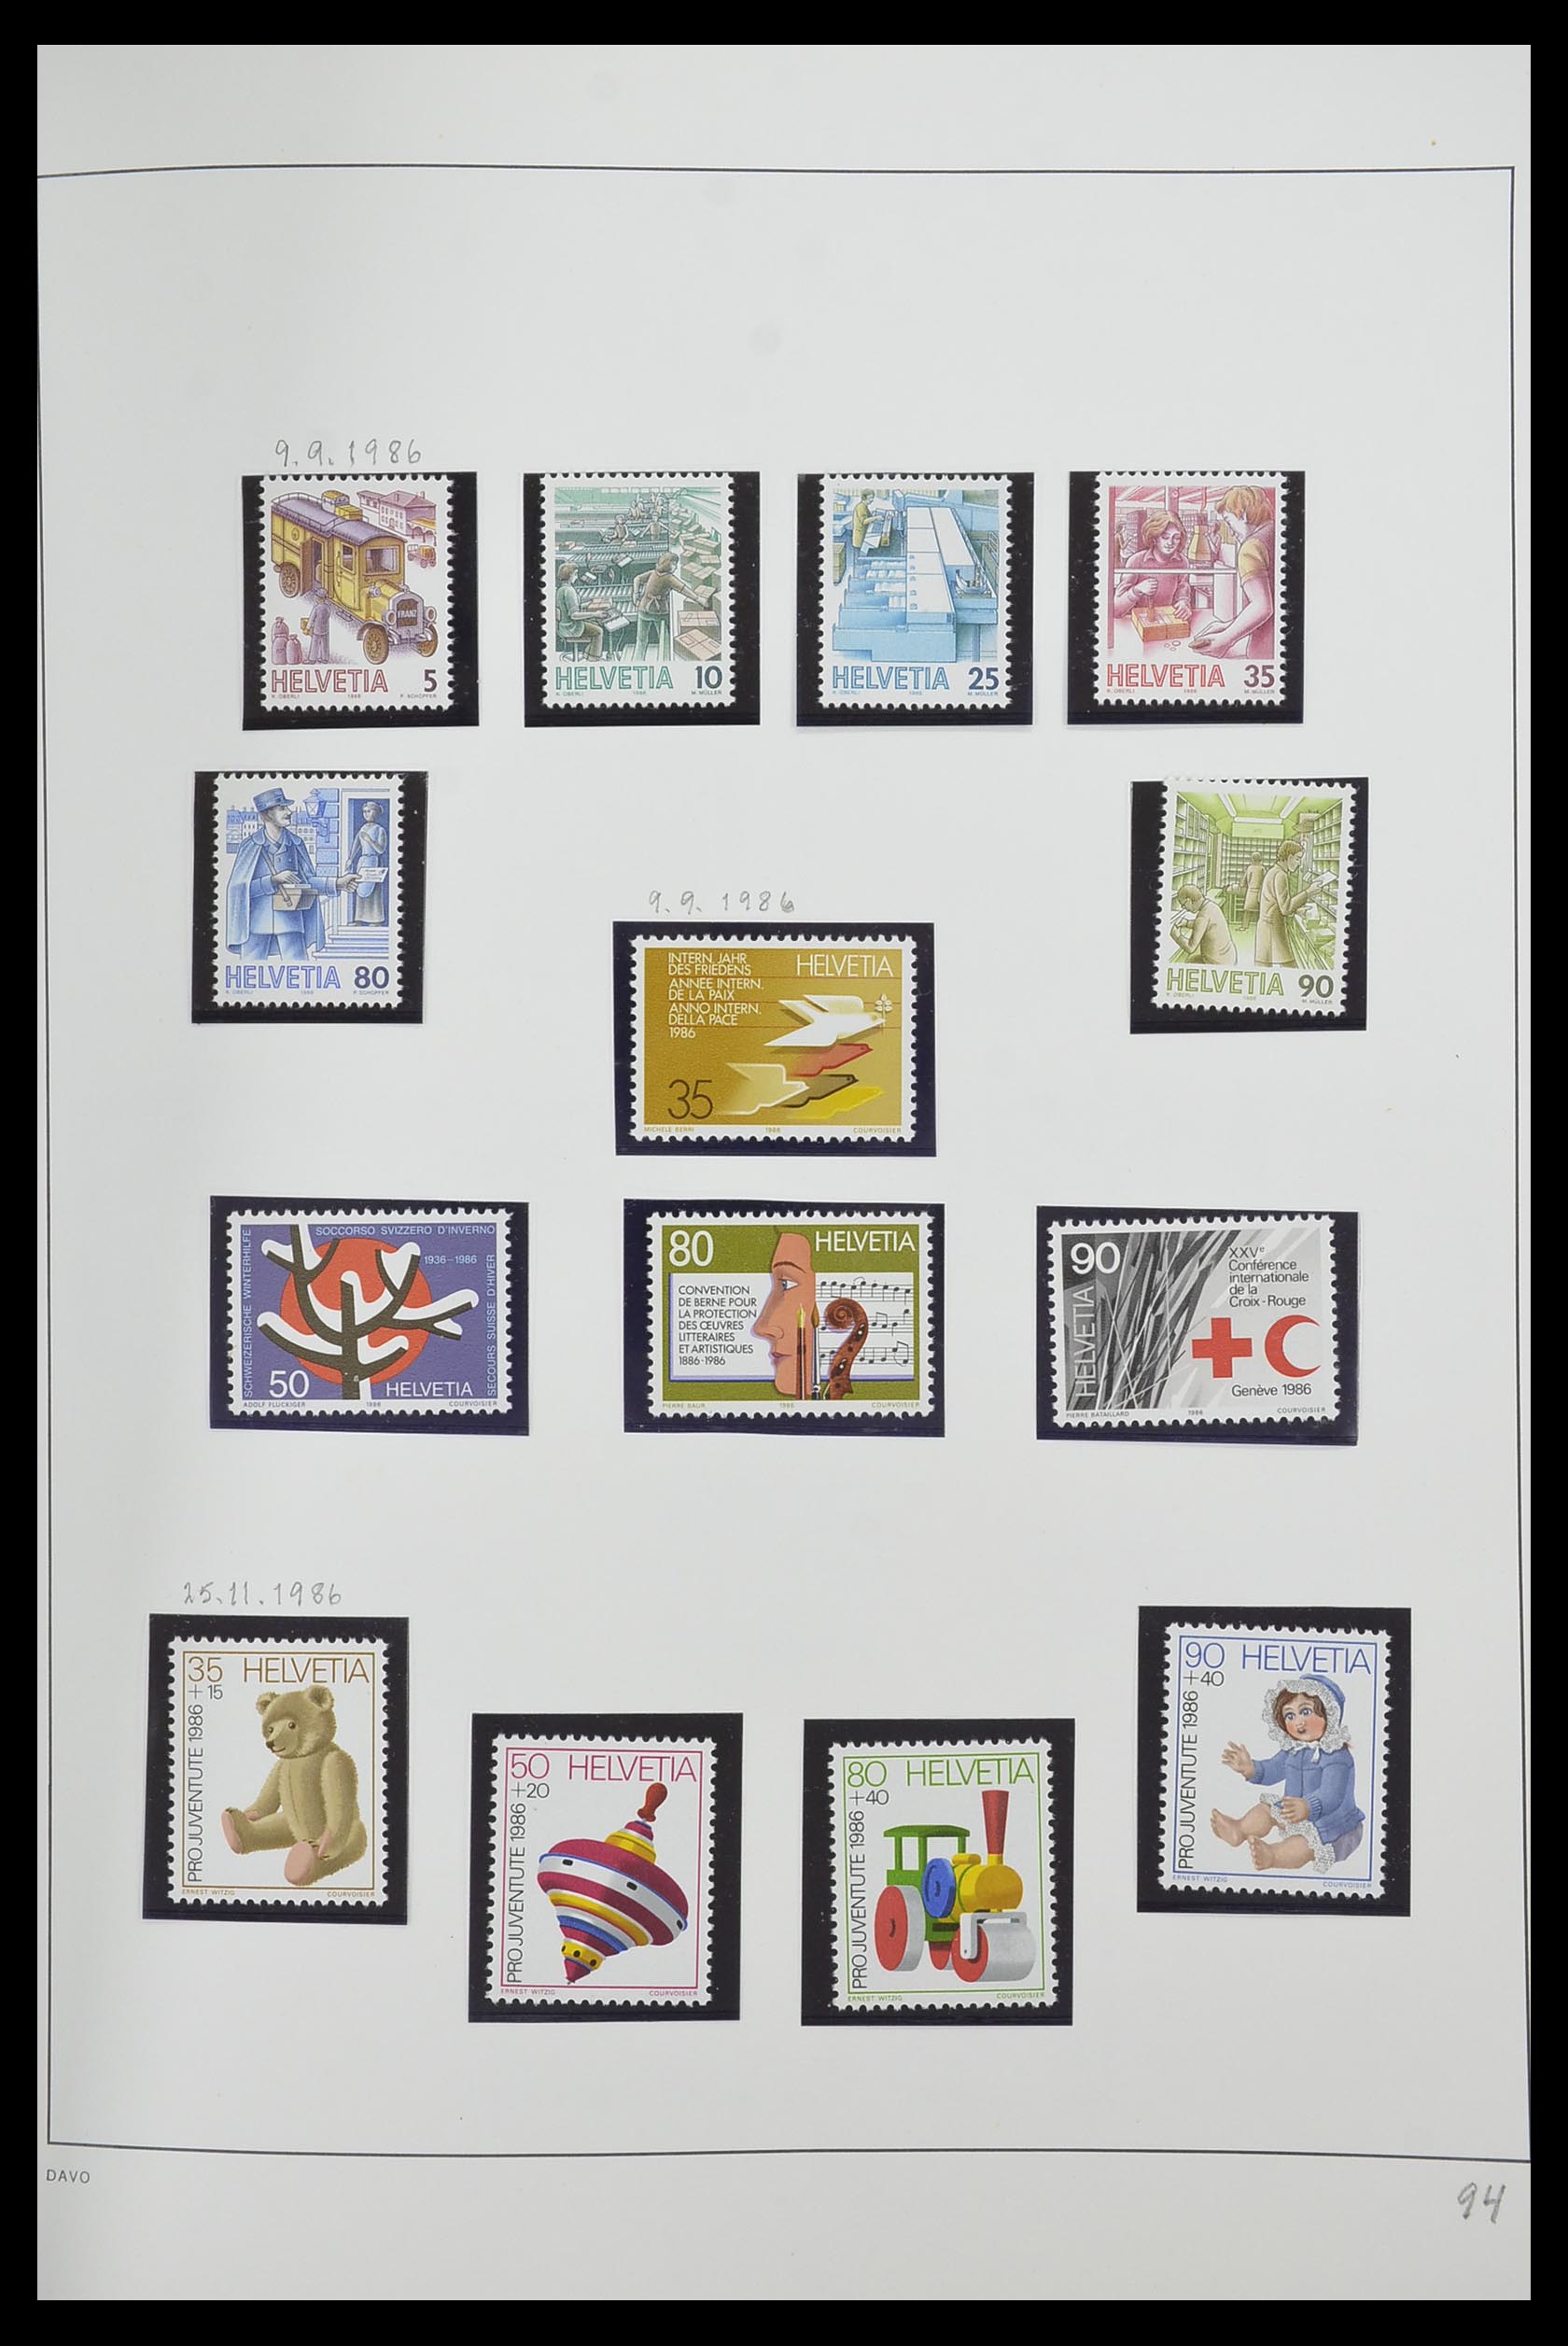 33556 096 - Stamp collection 33556 Switzerland 1862-2000.